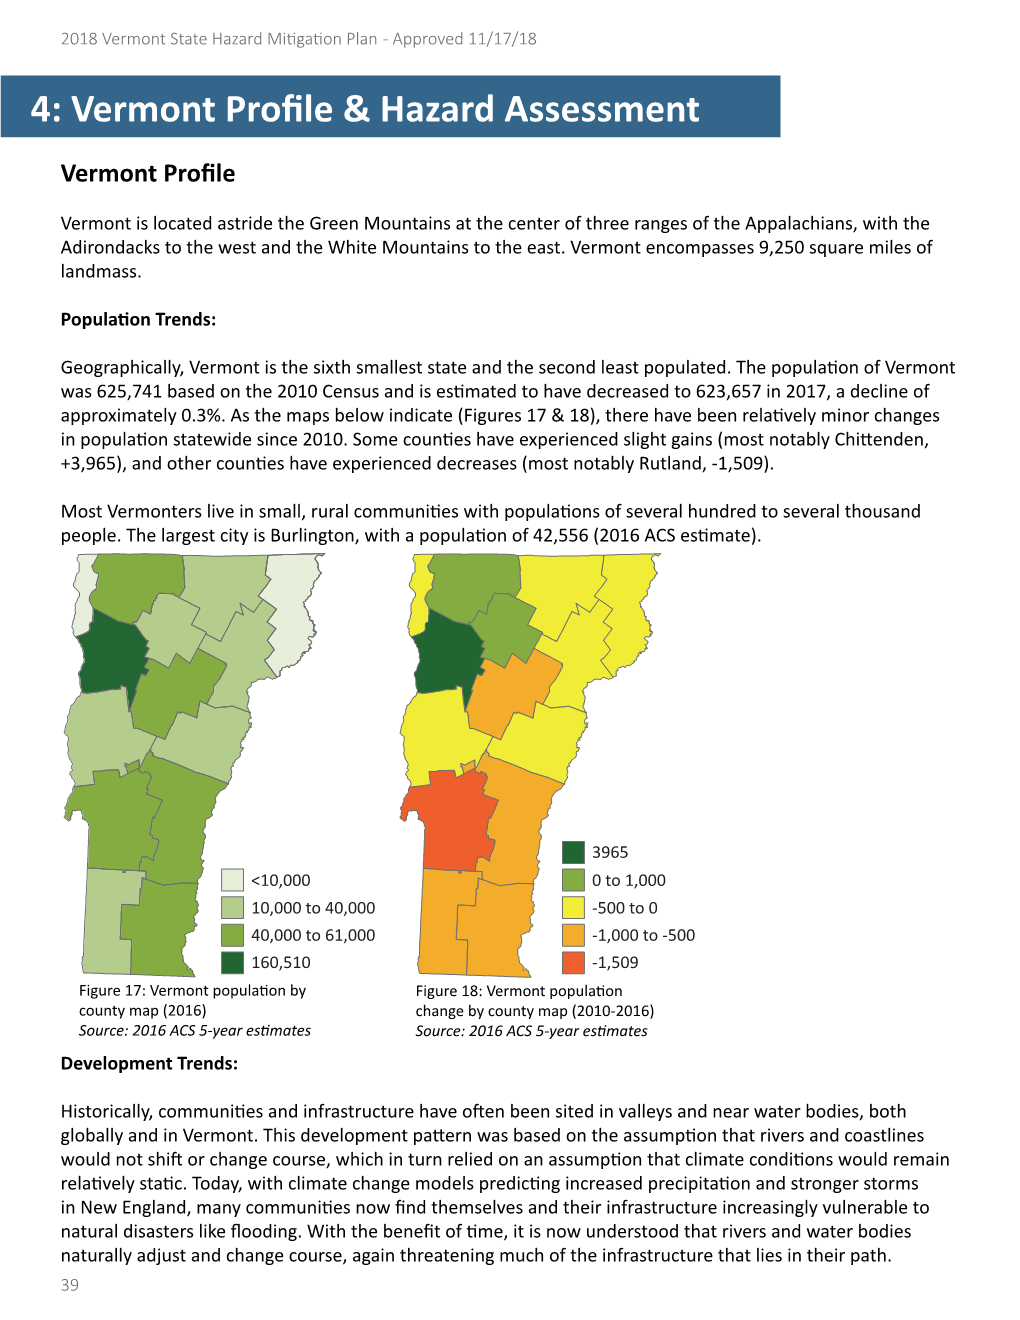 4: Vermont Profile & Hazard Assessment